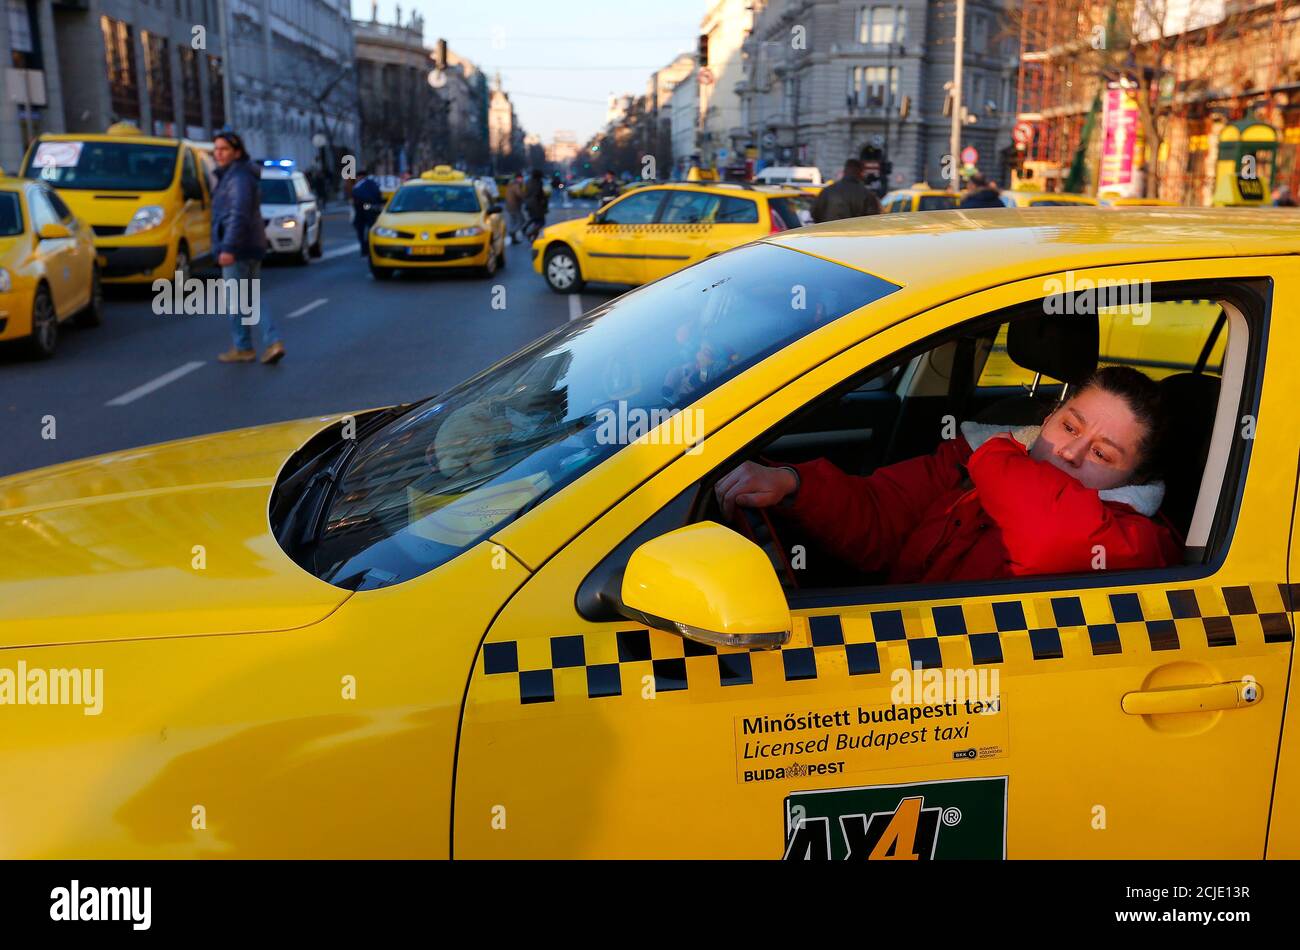 Такси Будапешт. Budapest Taxi. Таксист подвез девушку